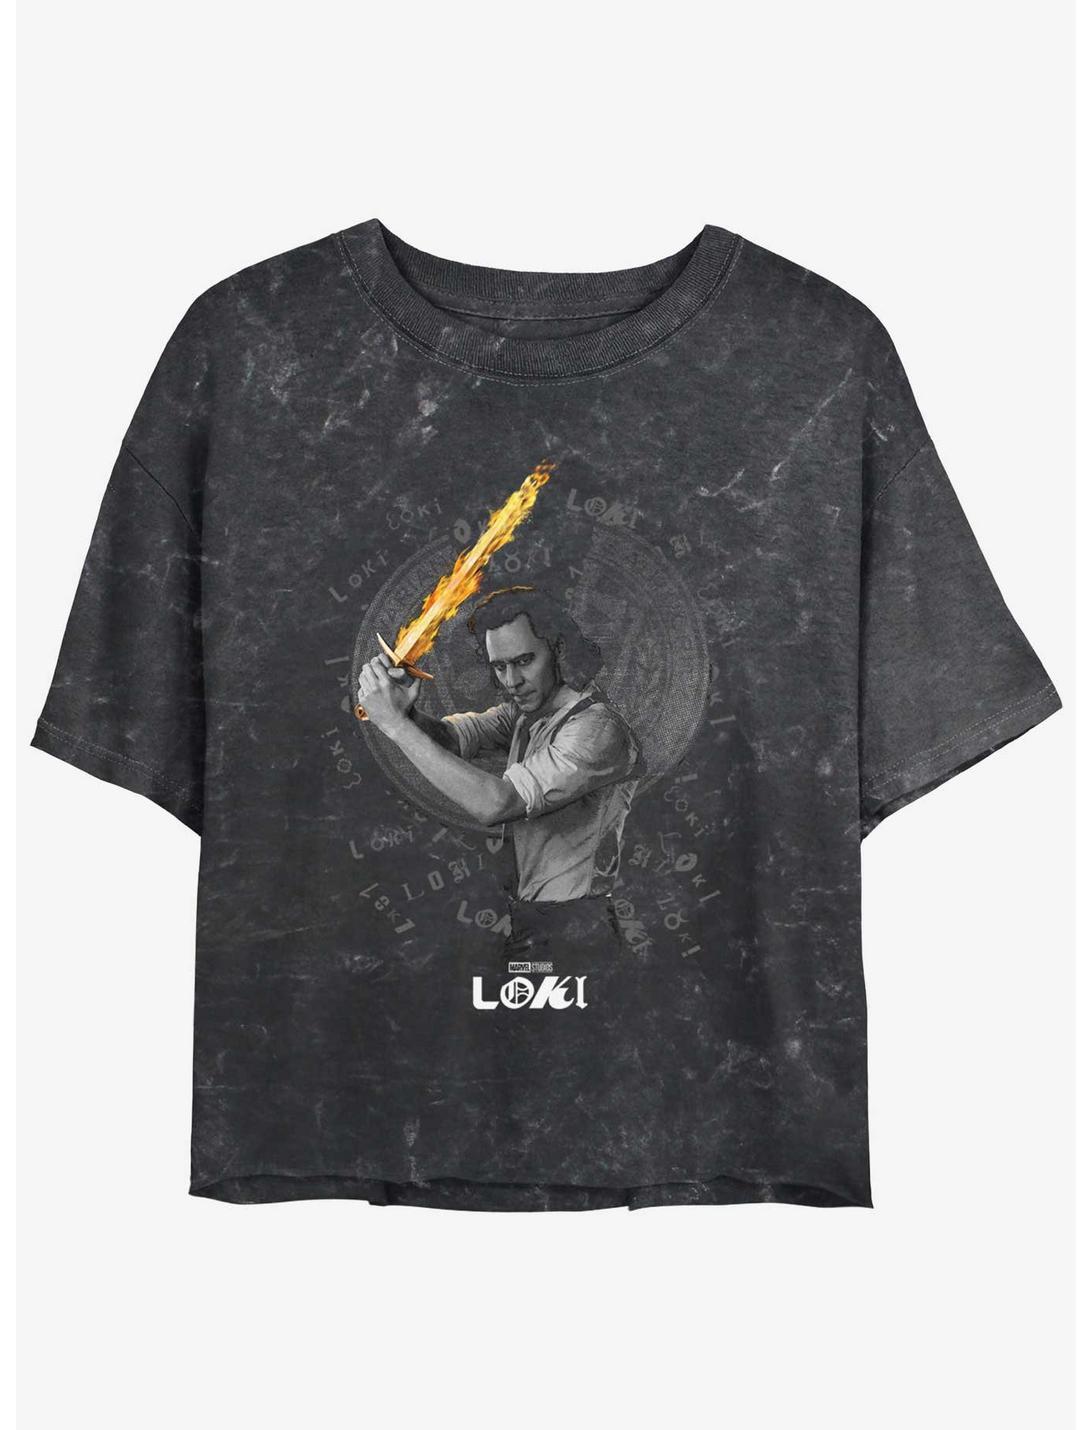 Marvel Loki Laevateinn Flaming Sword Womens Mineral Wash Crop T-Shirt, BLACK, hi-res